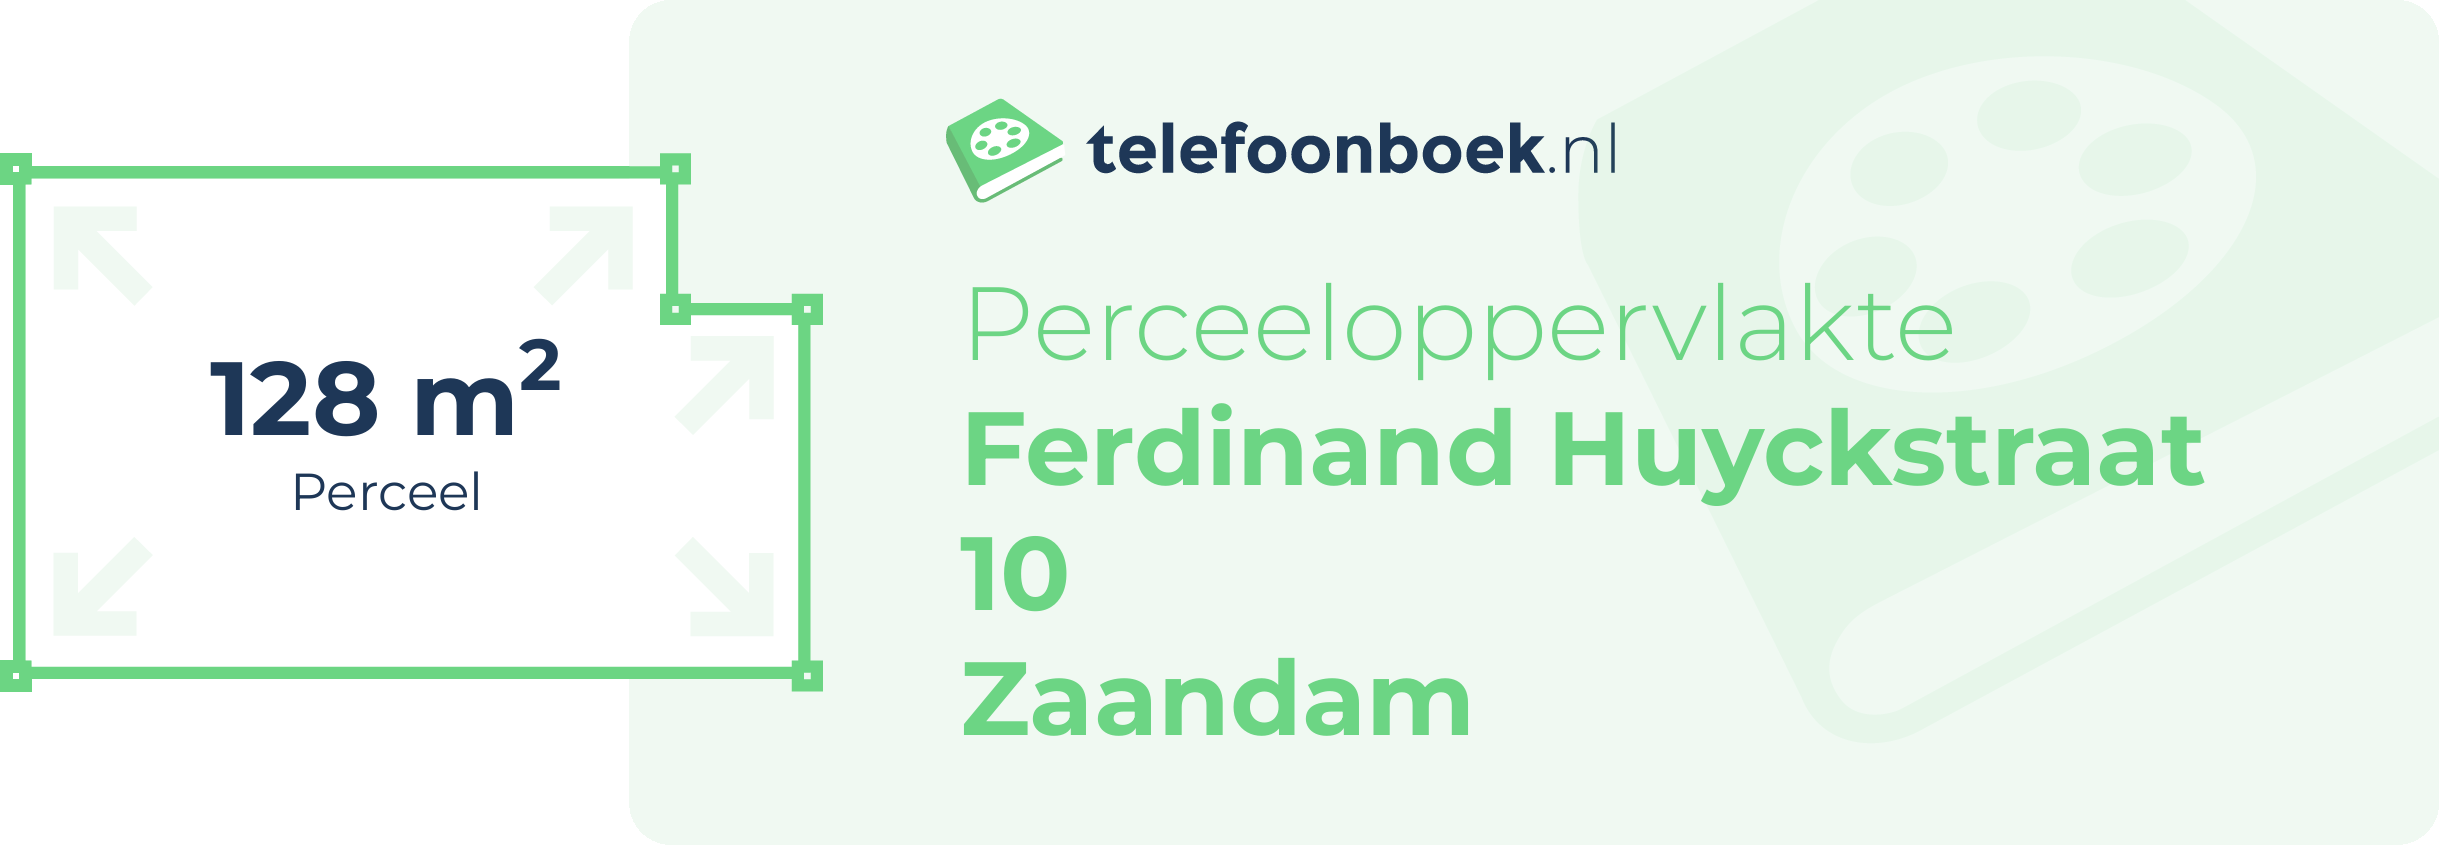 Perceeloppervlakte Ferdinand Huyckstraat 10 Zaandam